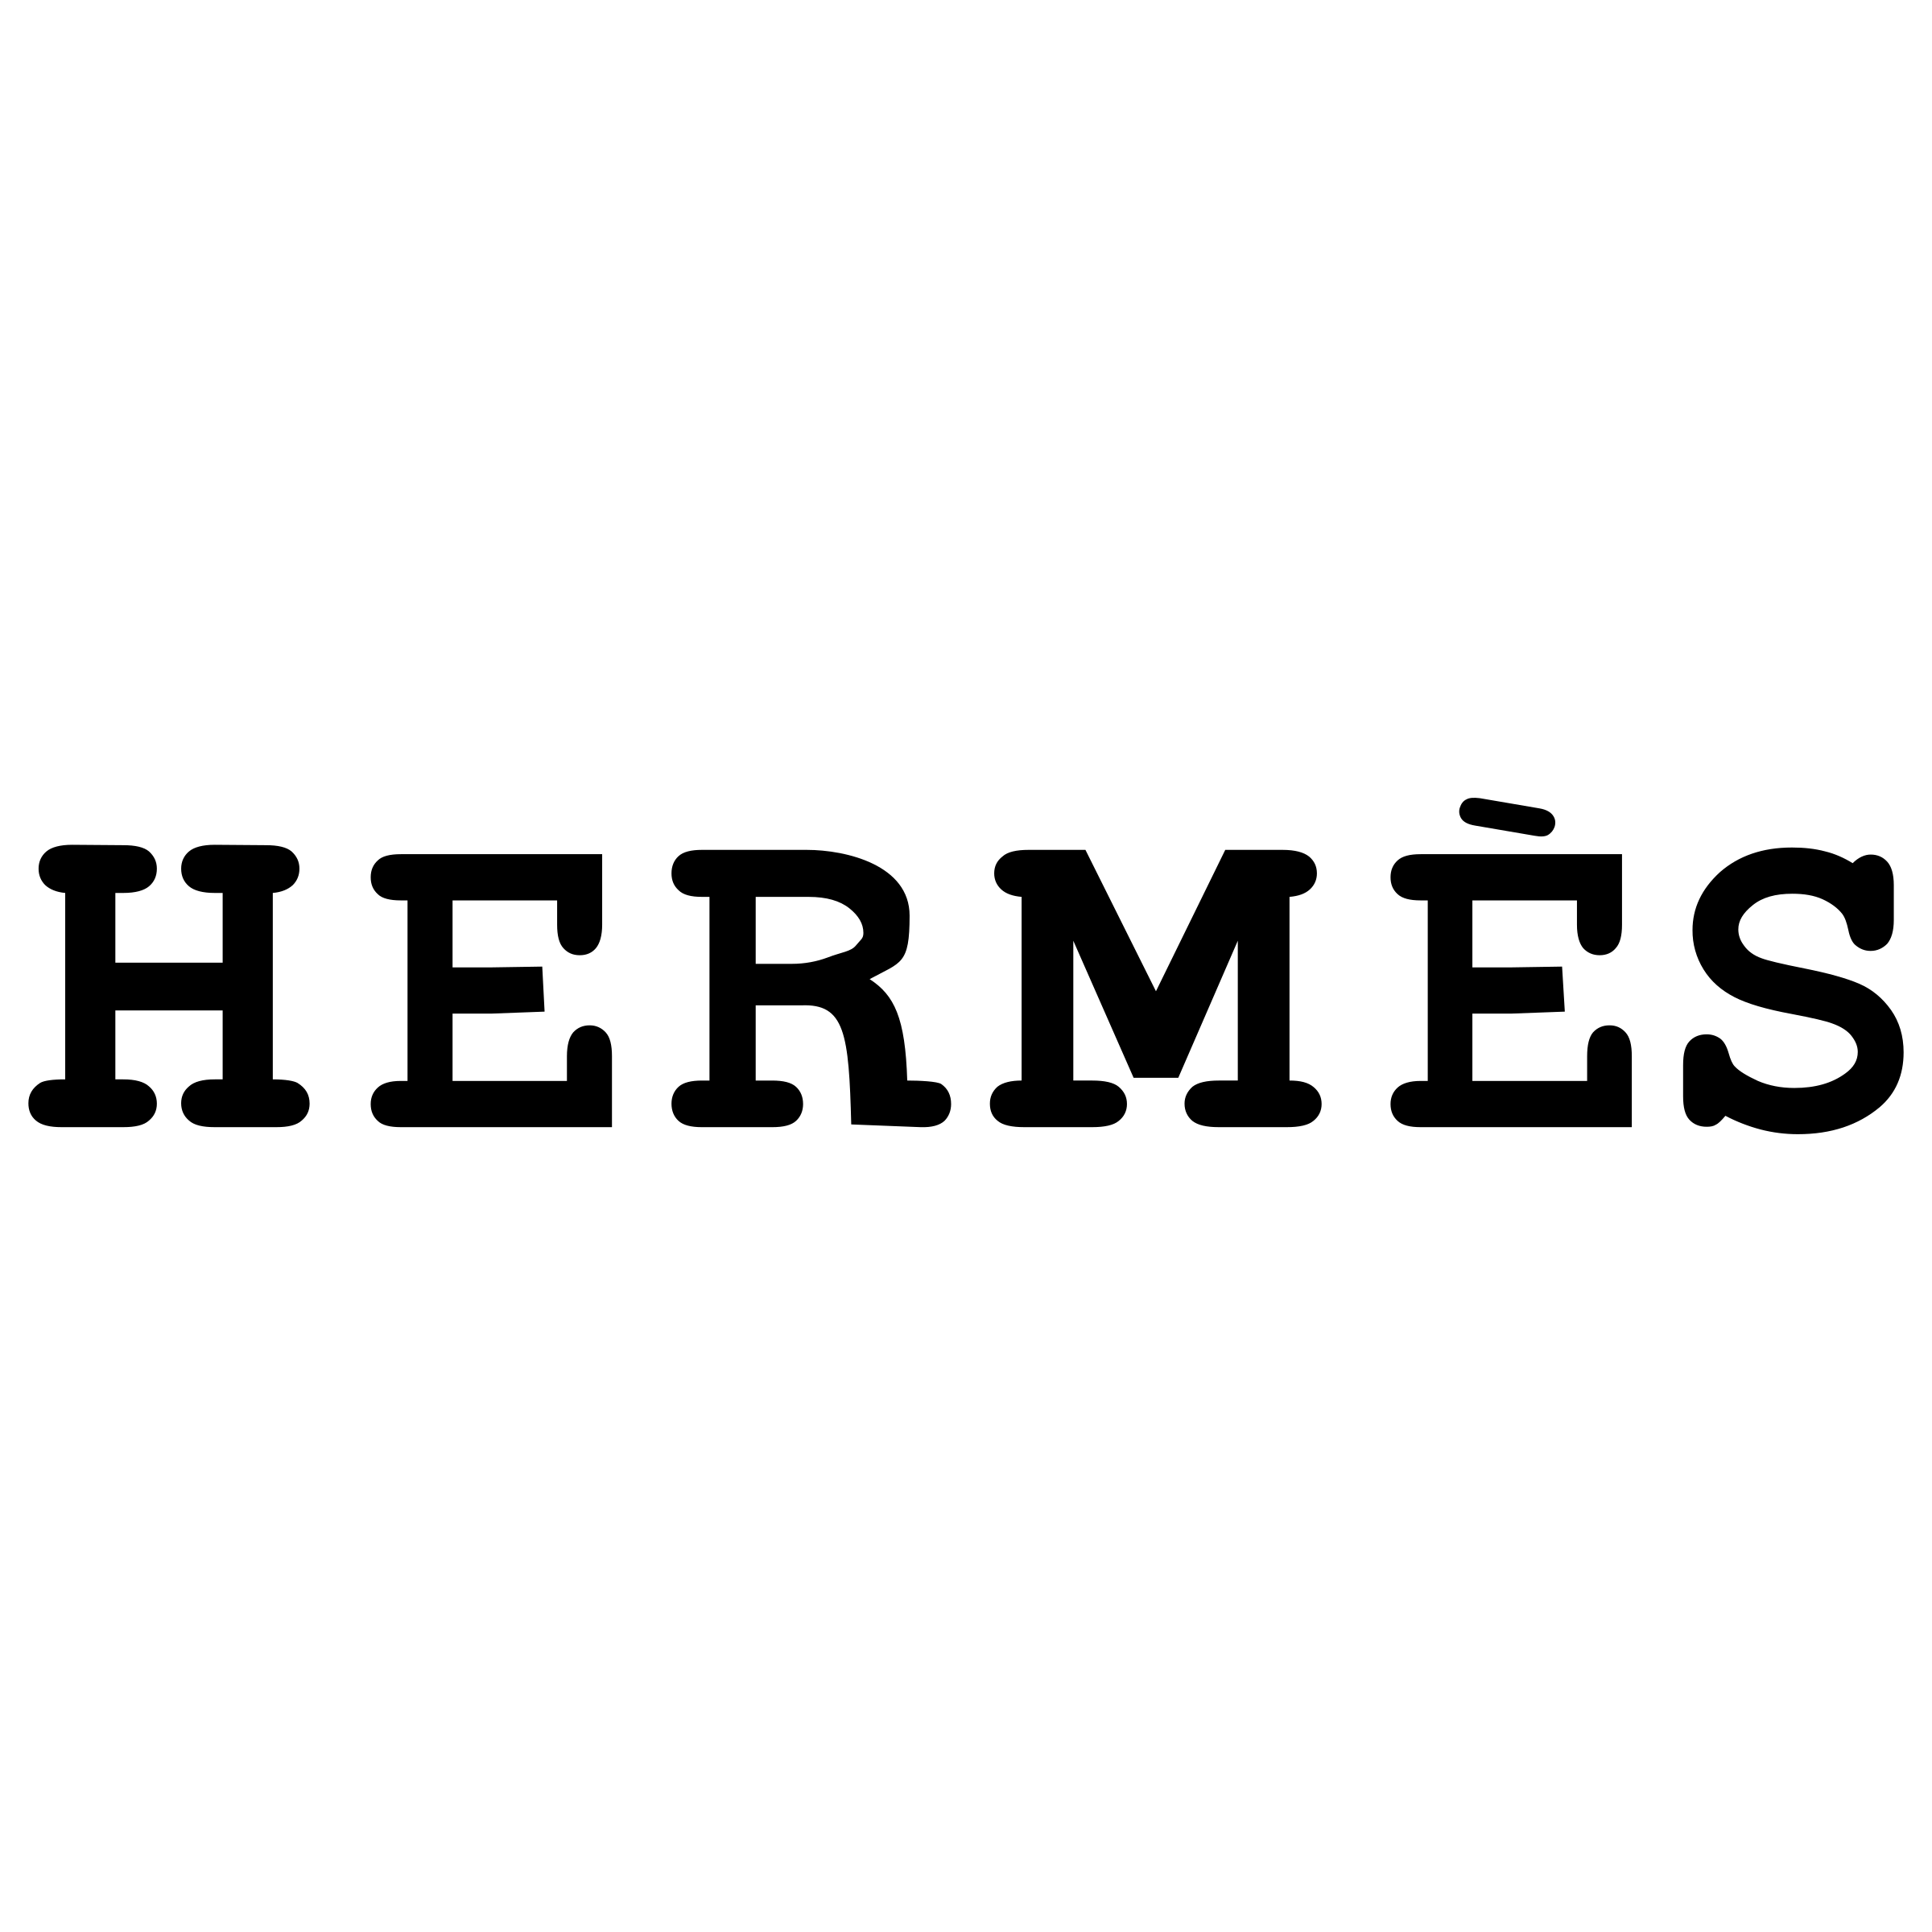 Hermes Transparent Logo - LogoDix